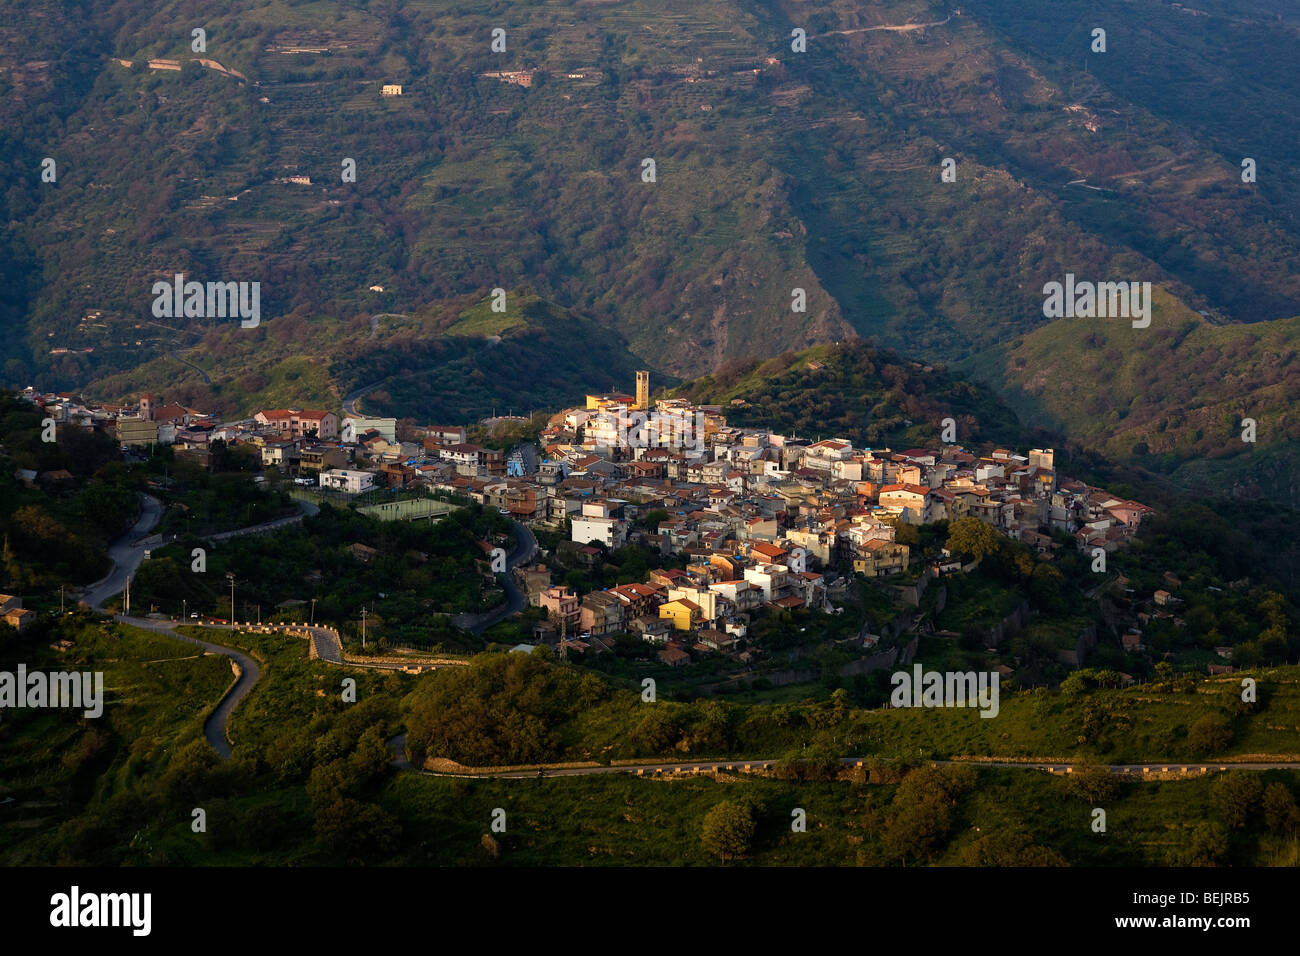 Village view, Roccafiorita, Sicily, Italy Stock Photo